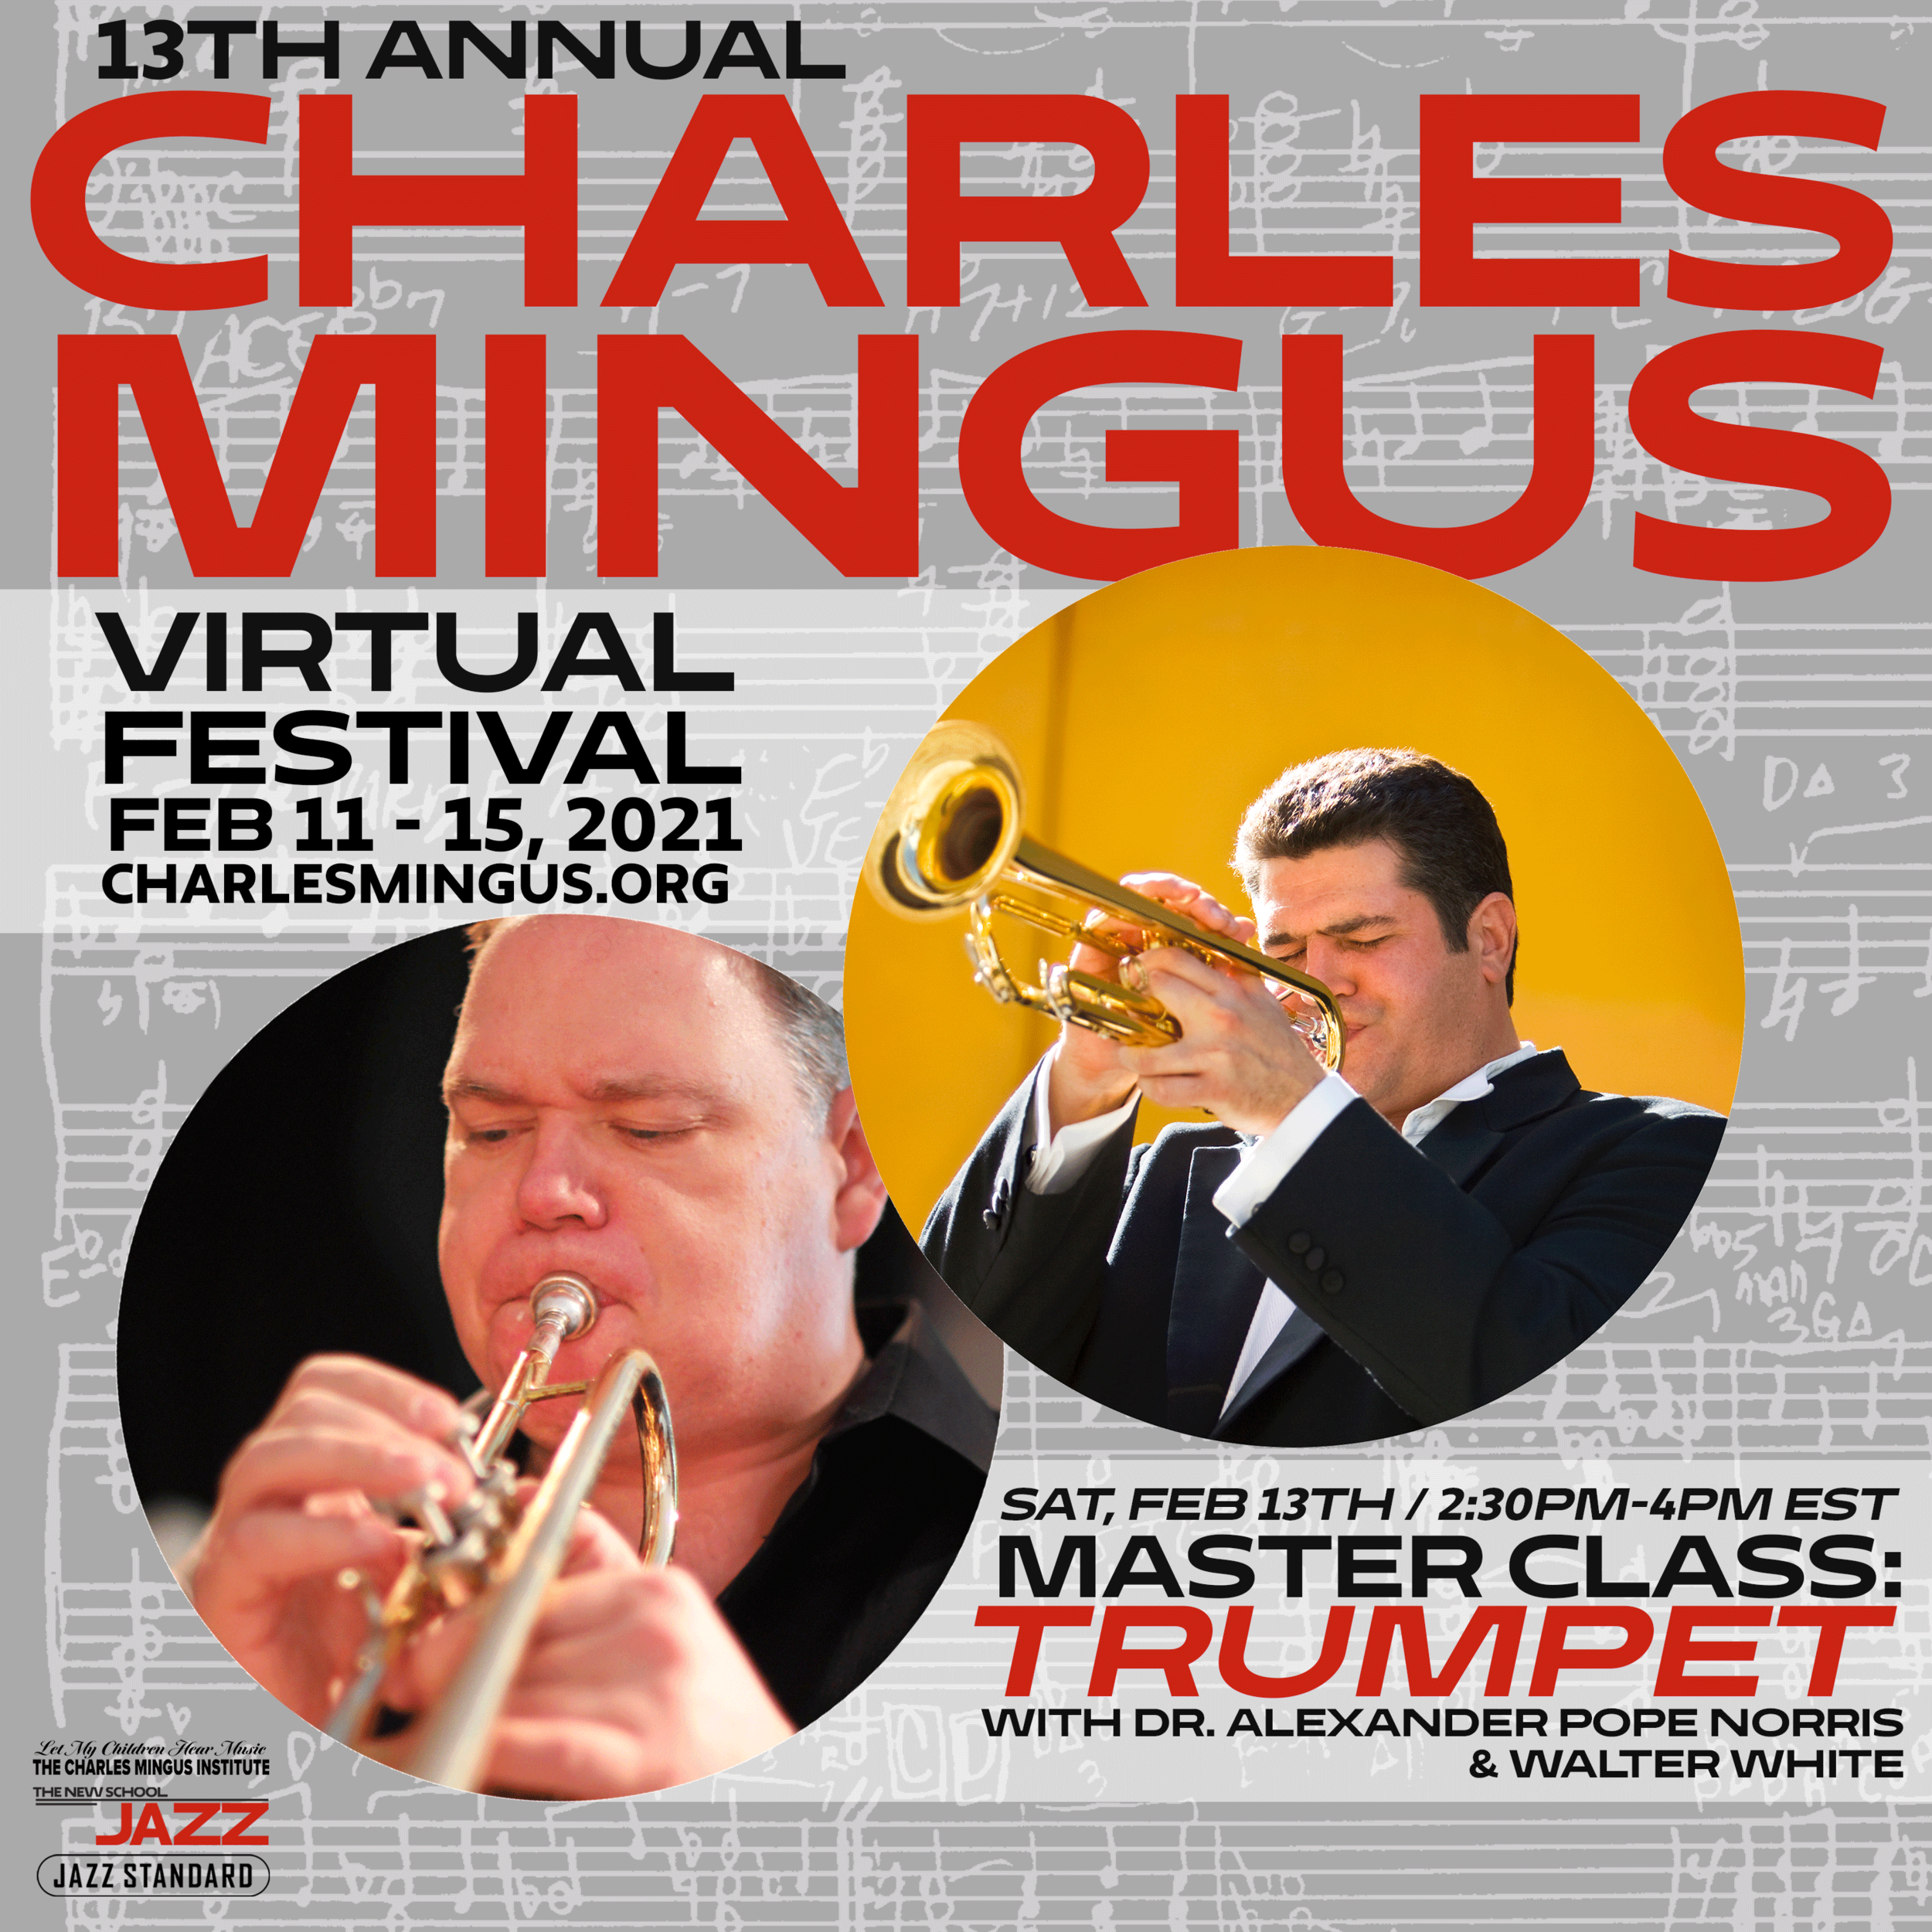 Mingus Fest 2021 / MASTER CLASS: Trumpets